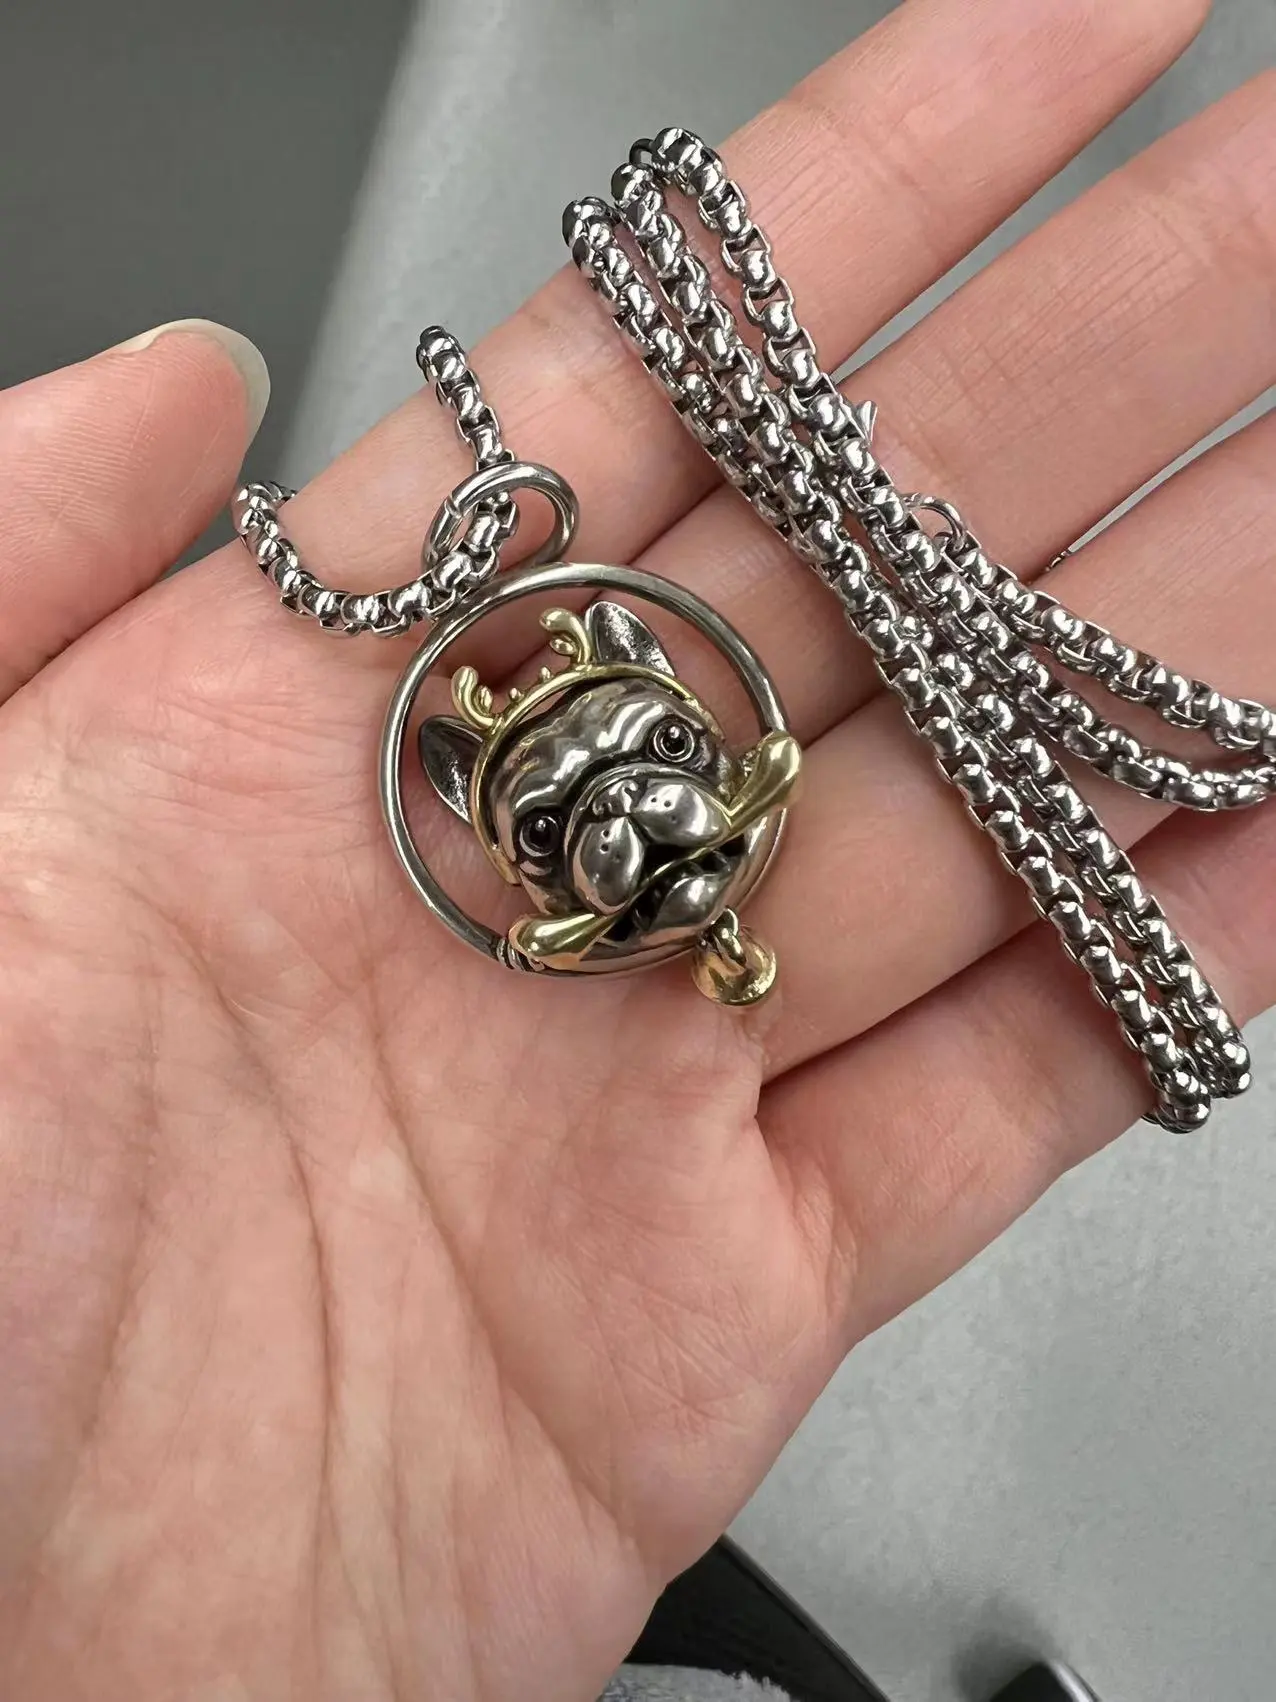 Bulldog Necklace Pendant, Send Family, Friends Gifts, Creative Pendants